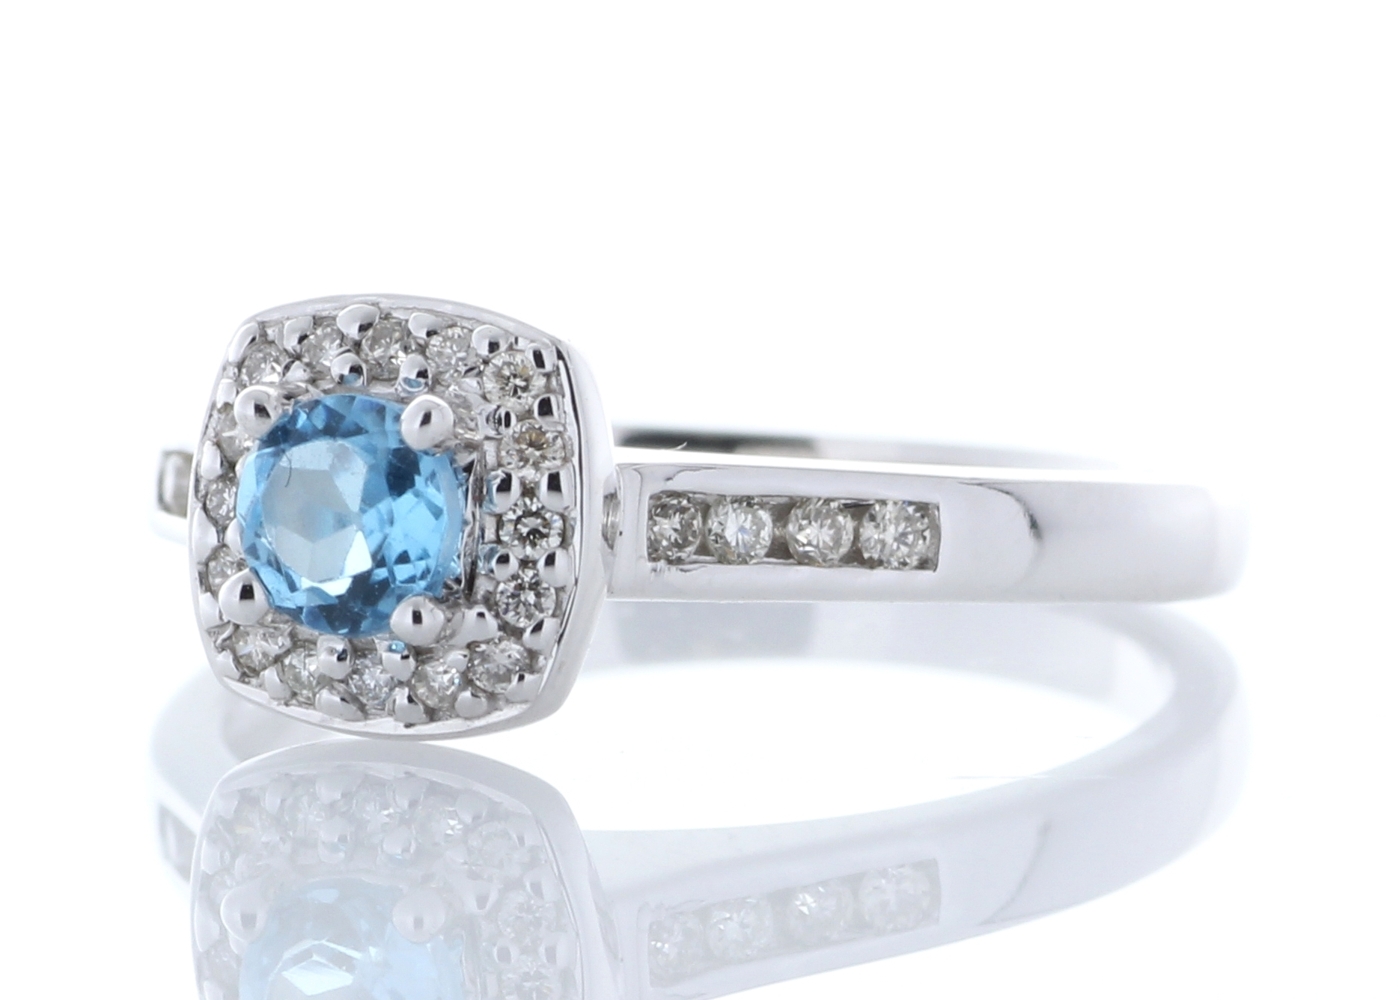 9ct White Gold Blue Topaz Diamond Ring 0.22 Carats - Image 2 of 4